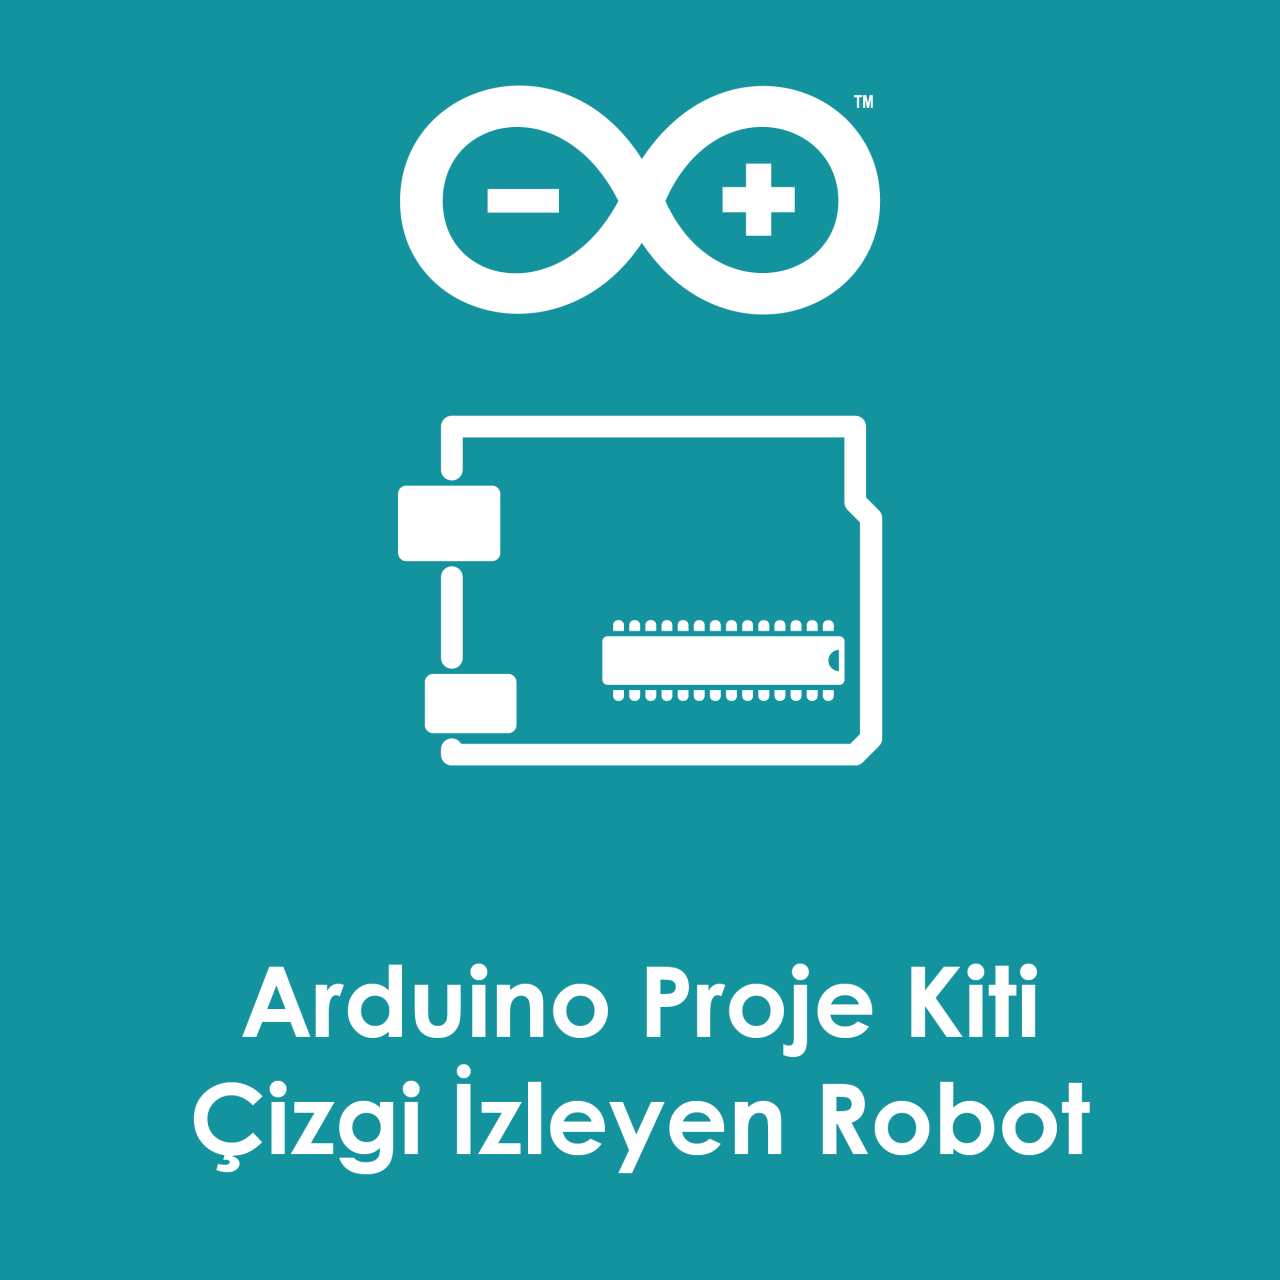 Arduino Proje Kiti - Çizgi İzleyen Robot (Demonte)